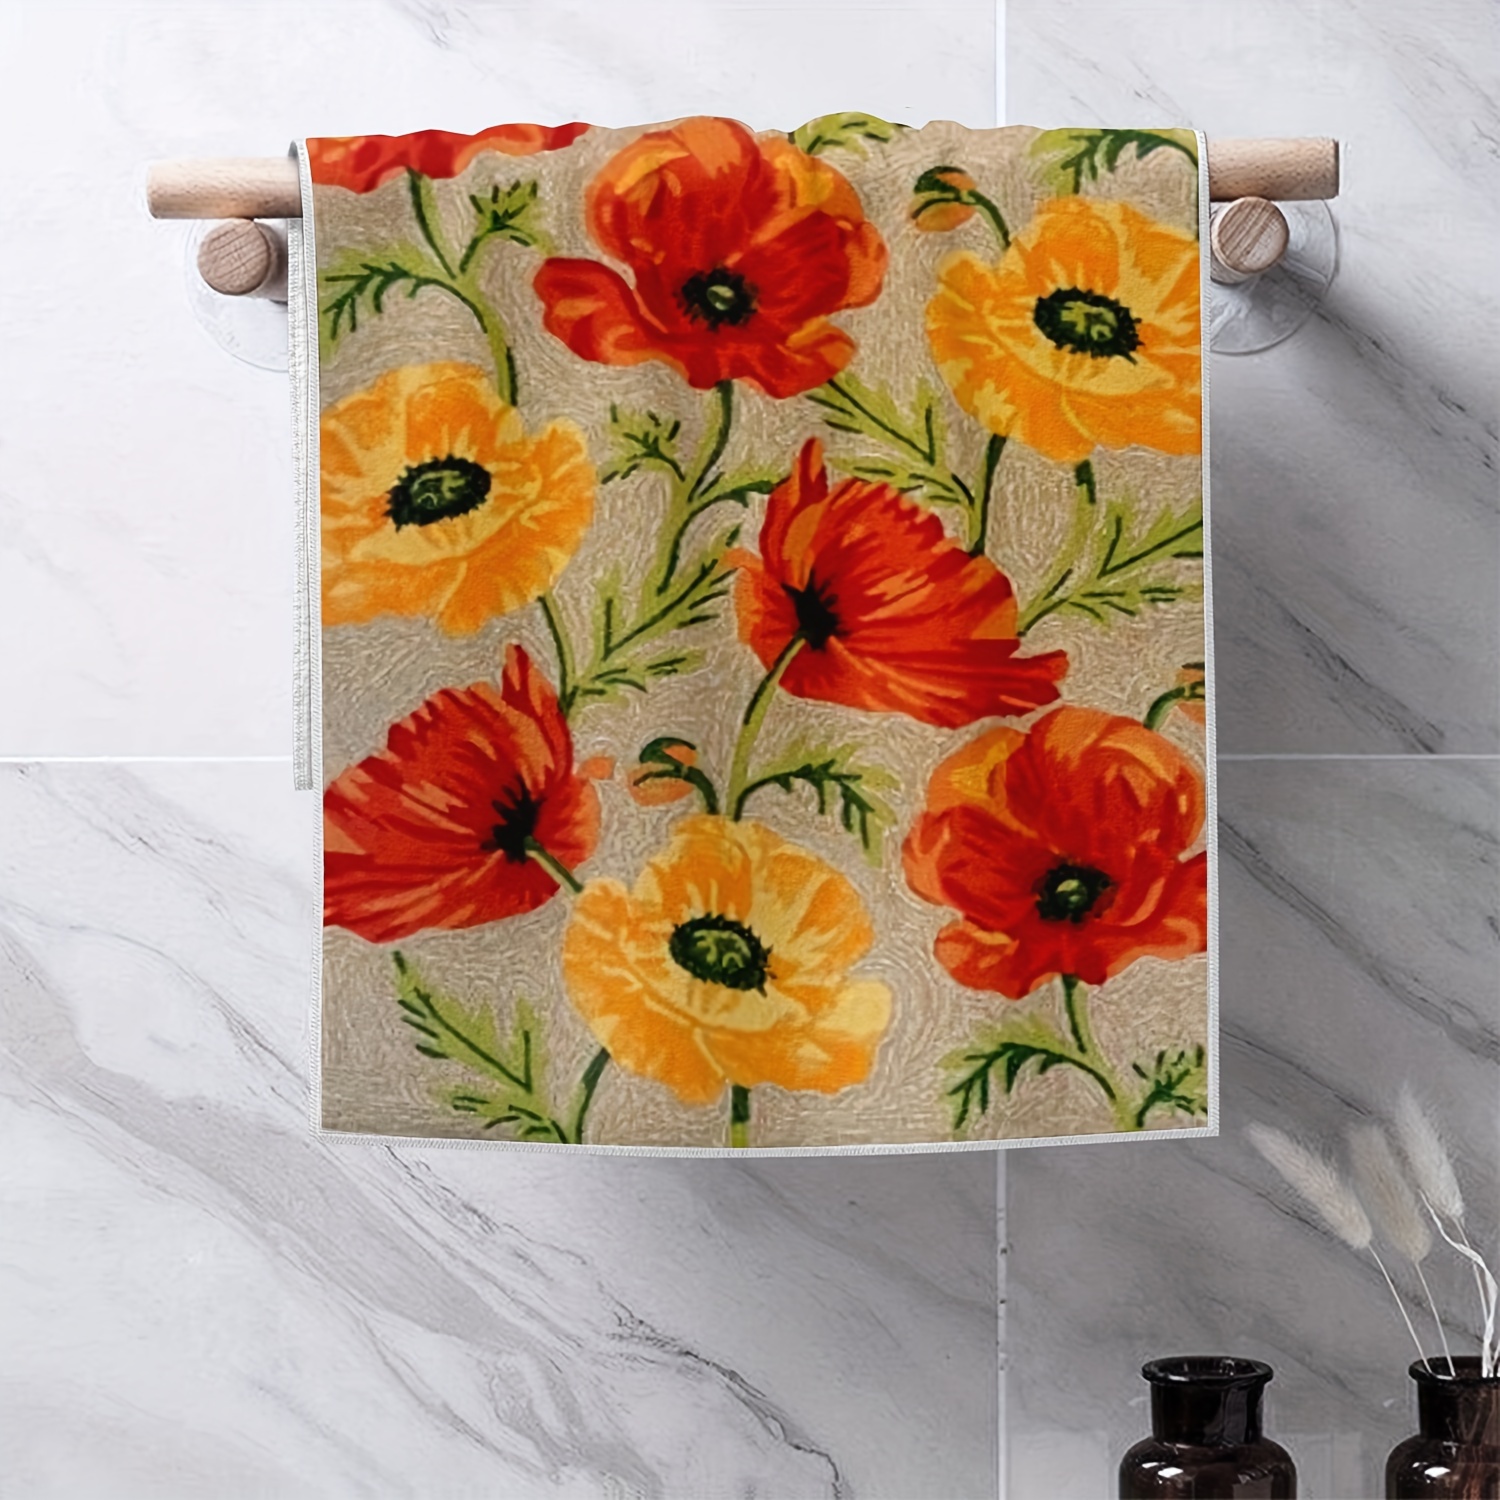 

2-piece Microfiber Dish Towels Set - Contemporary Floral Kitchen Towel Set, Machine Washable, Ultra Fine Knit Fabric, Oblong Shape, Painterly Poppy Flower Theme